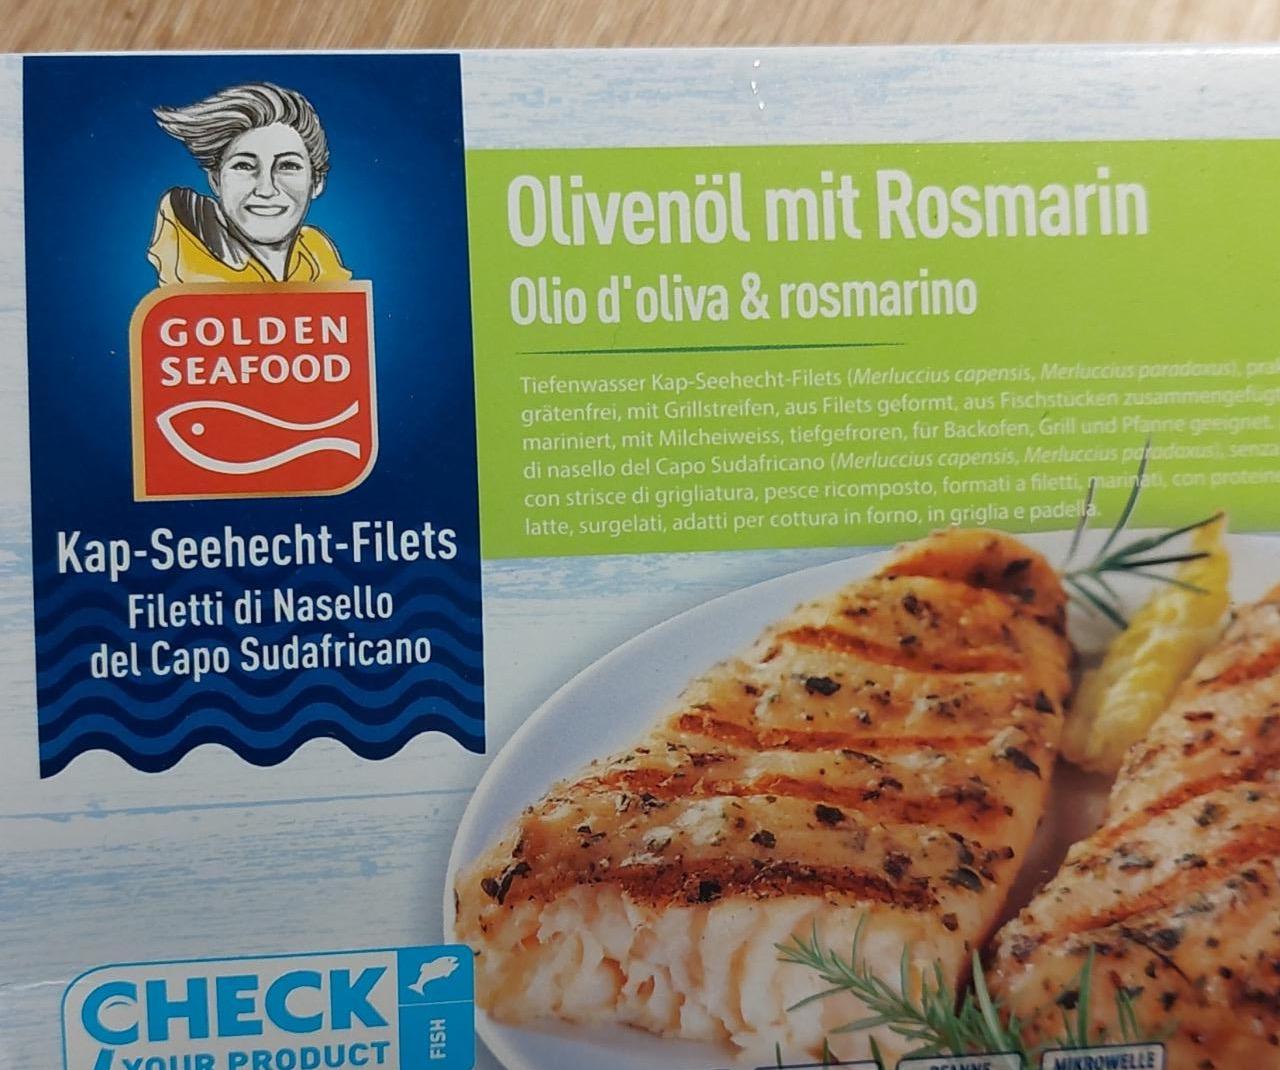 Képek - Olivenöl mit Rosmarin Golden seafood